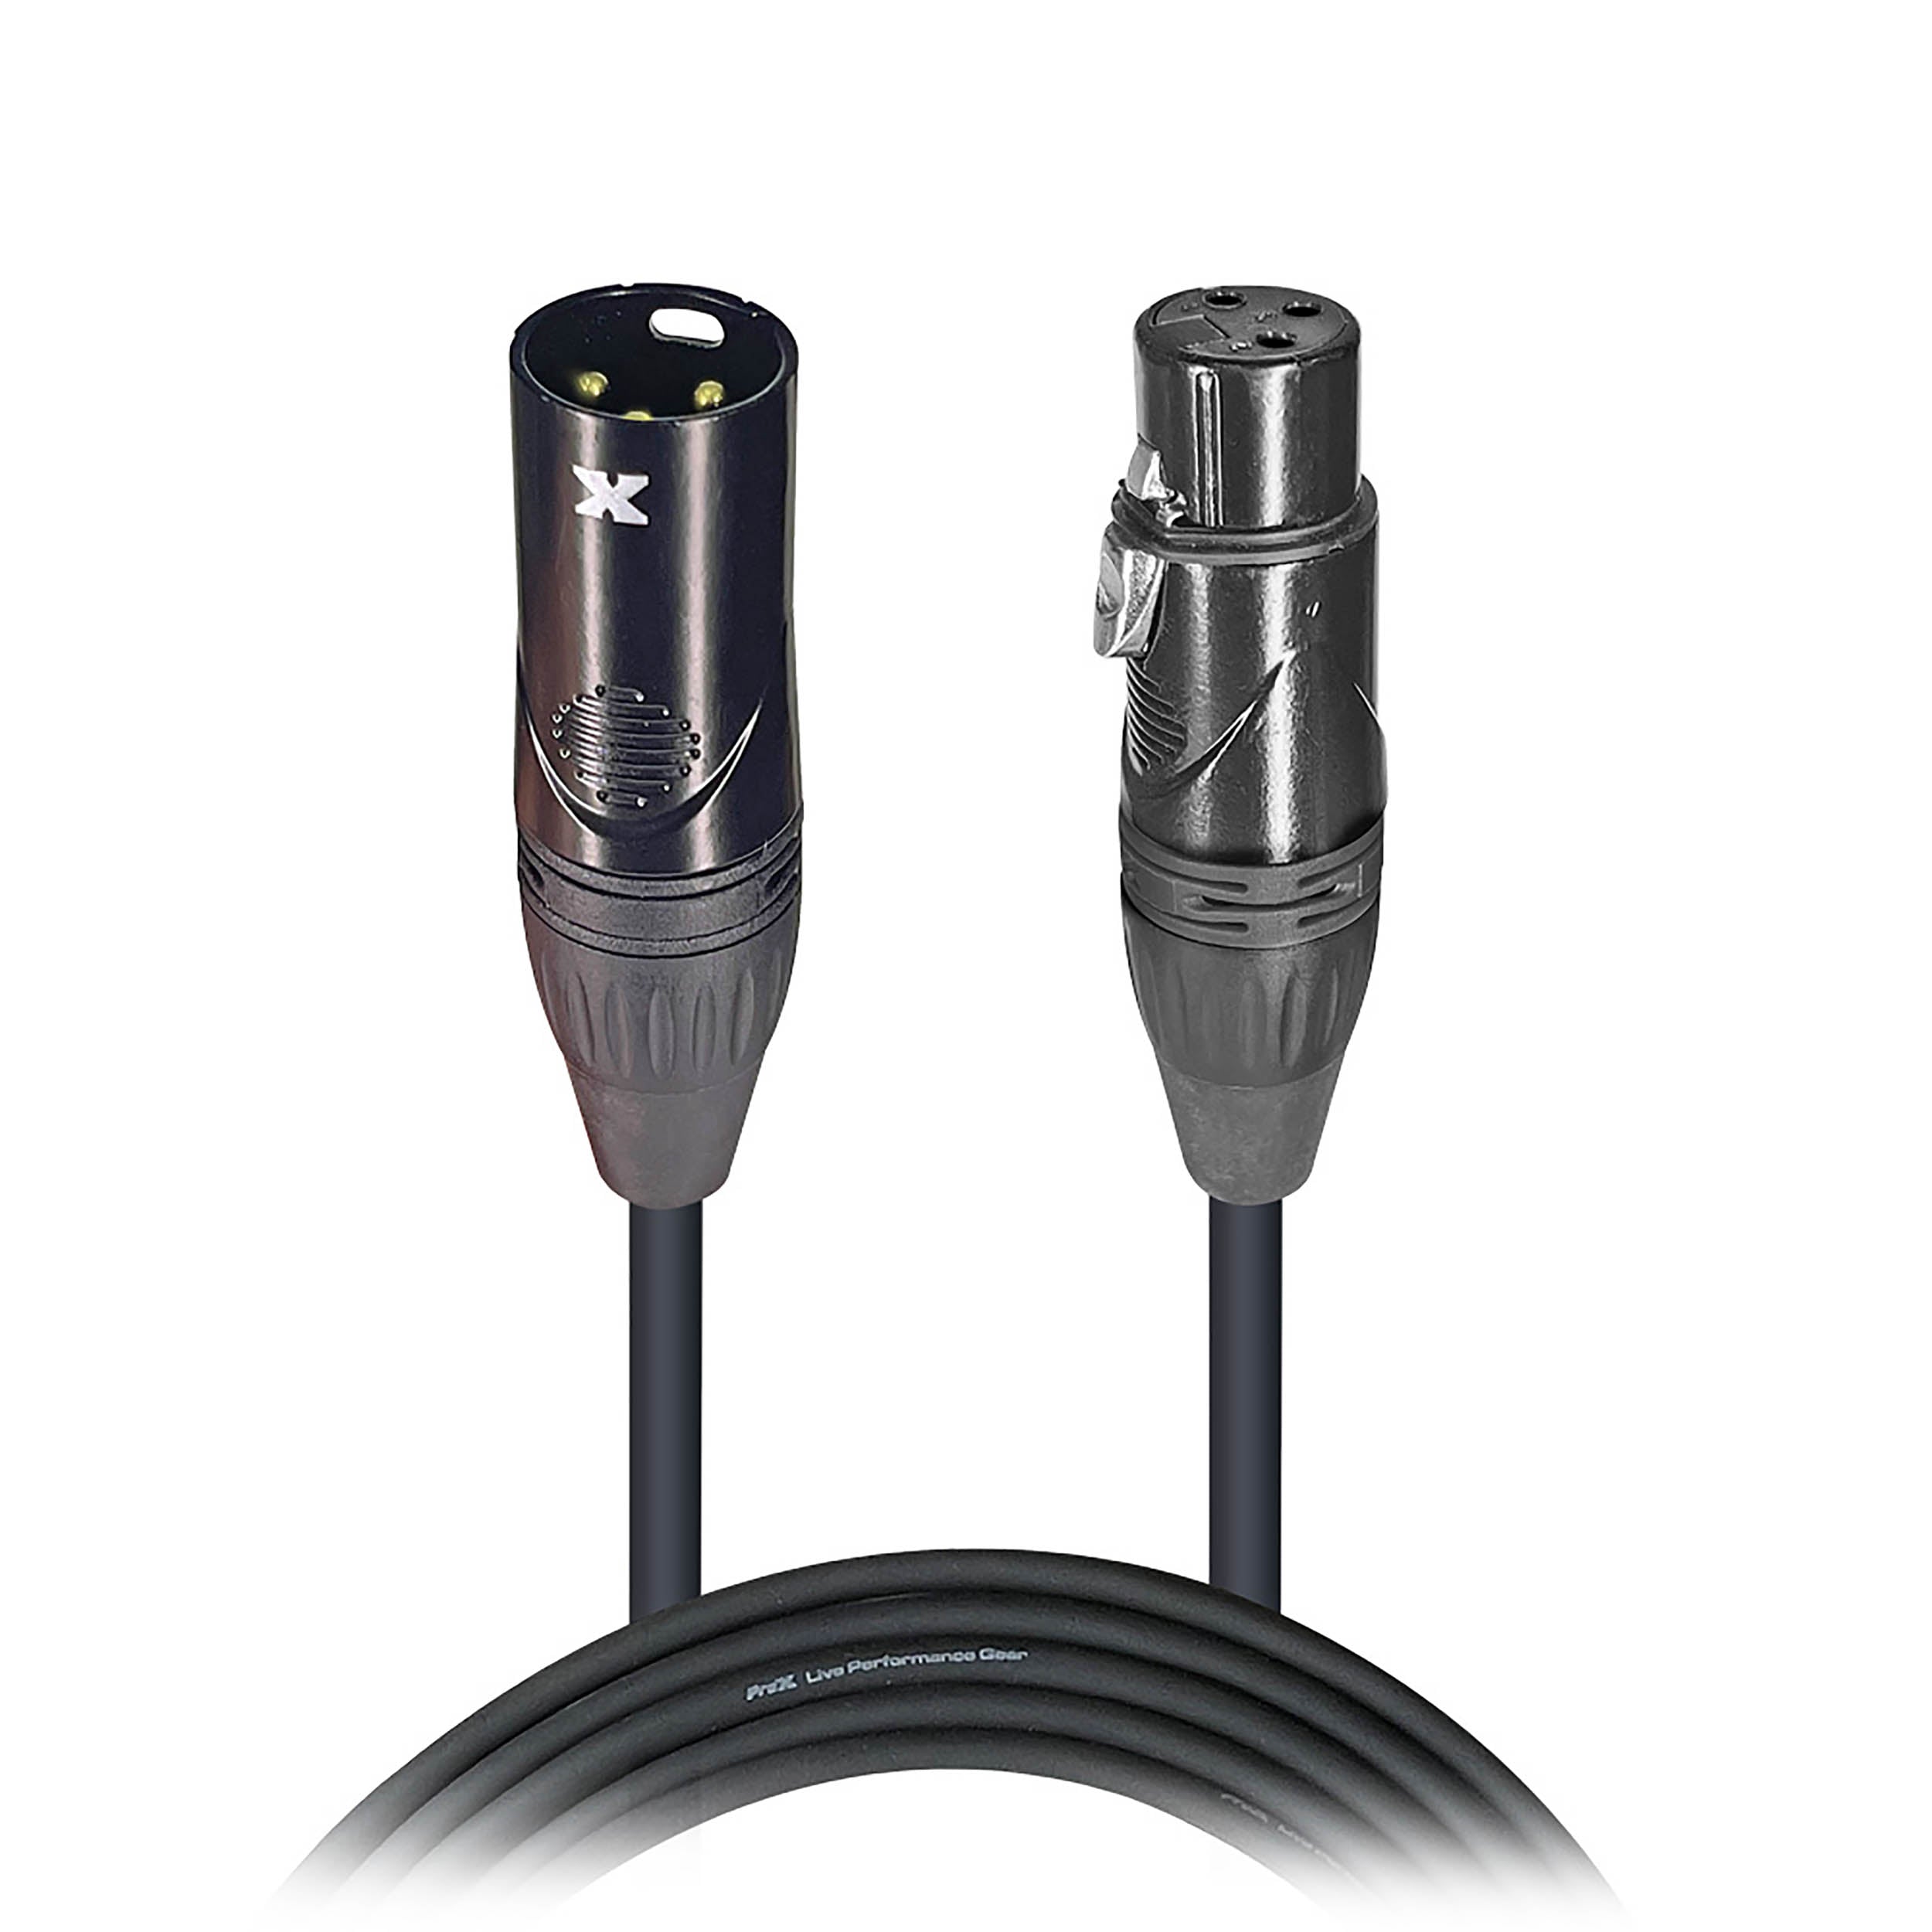 ProX XC-DMX10, DMX XLR3-M to XLR3-F High Performance Cable - 10 Feet by ProX Cases